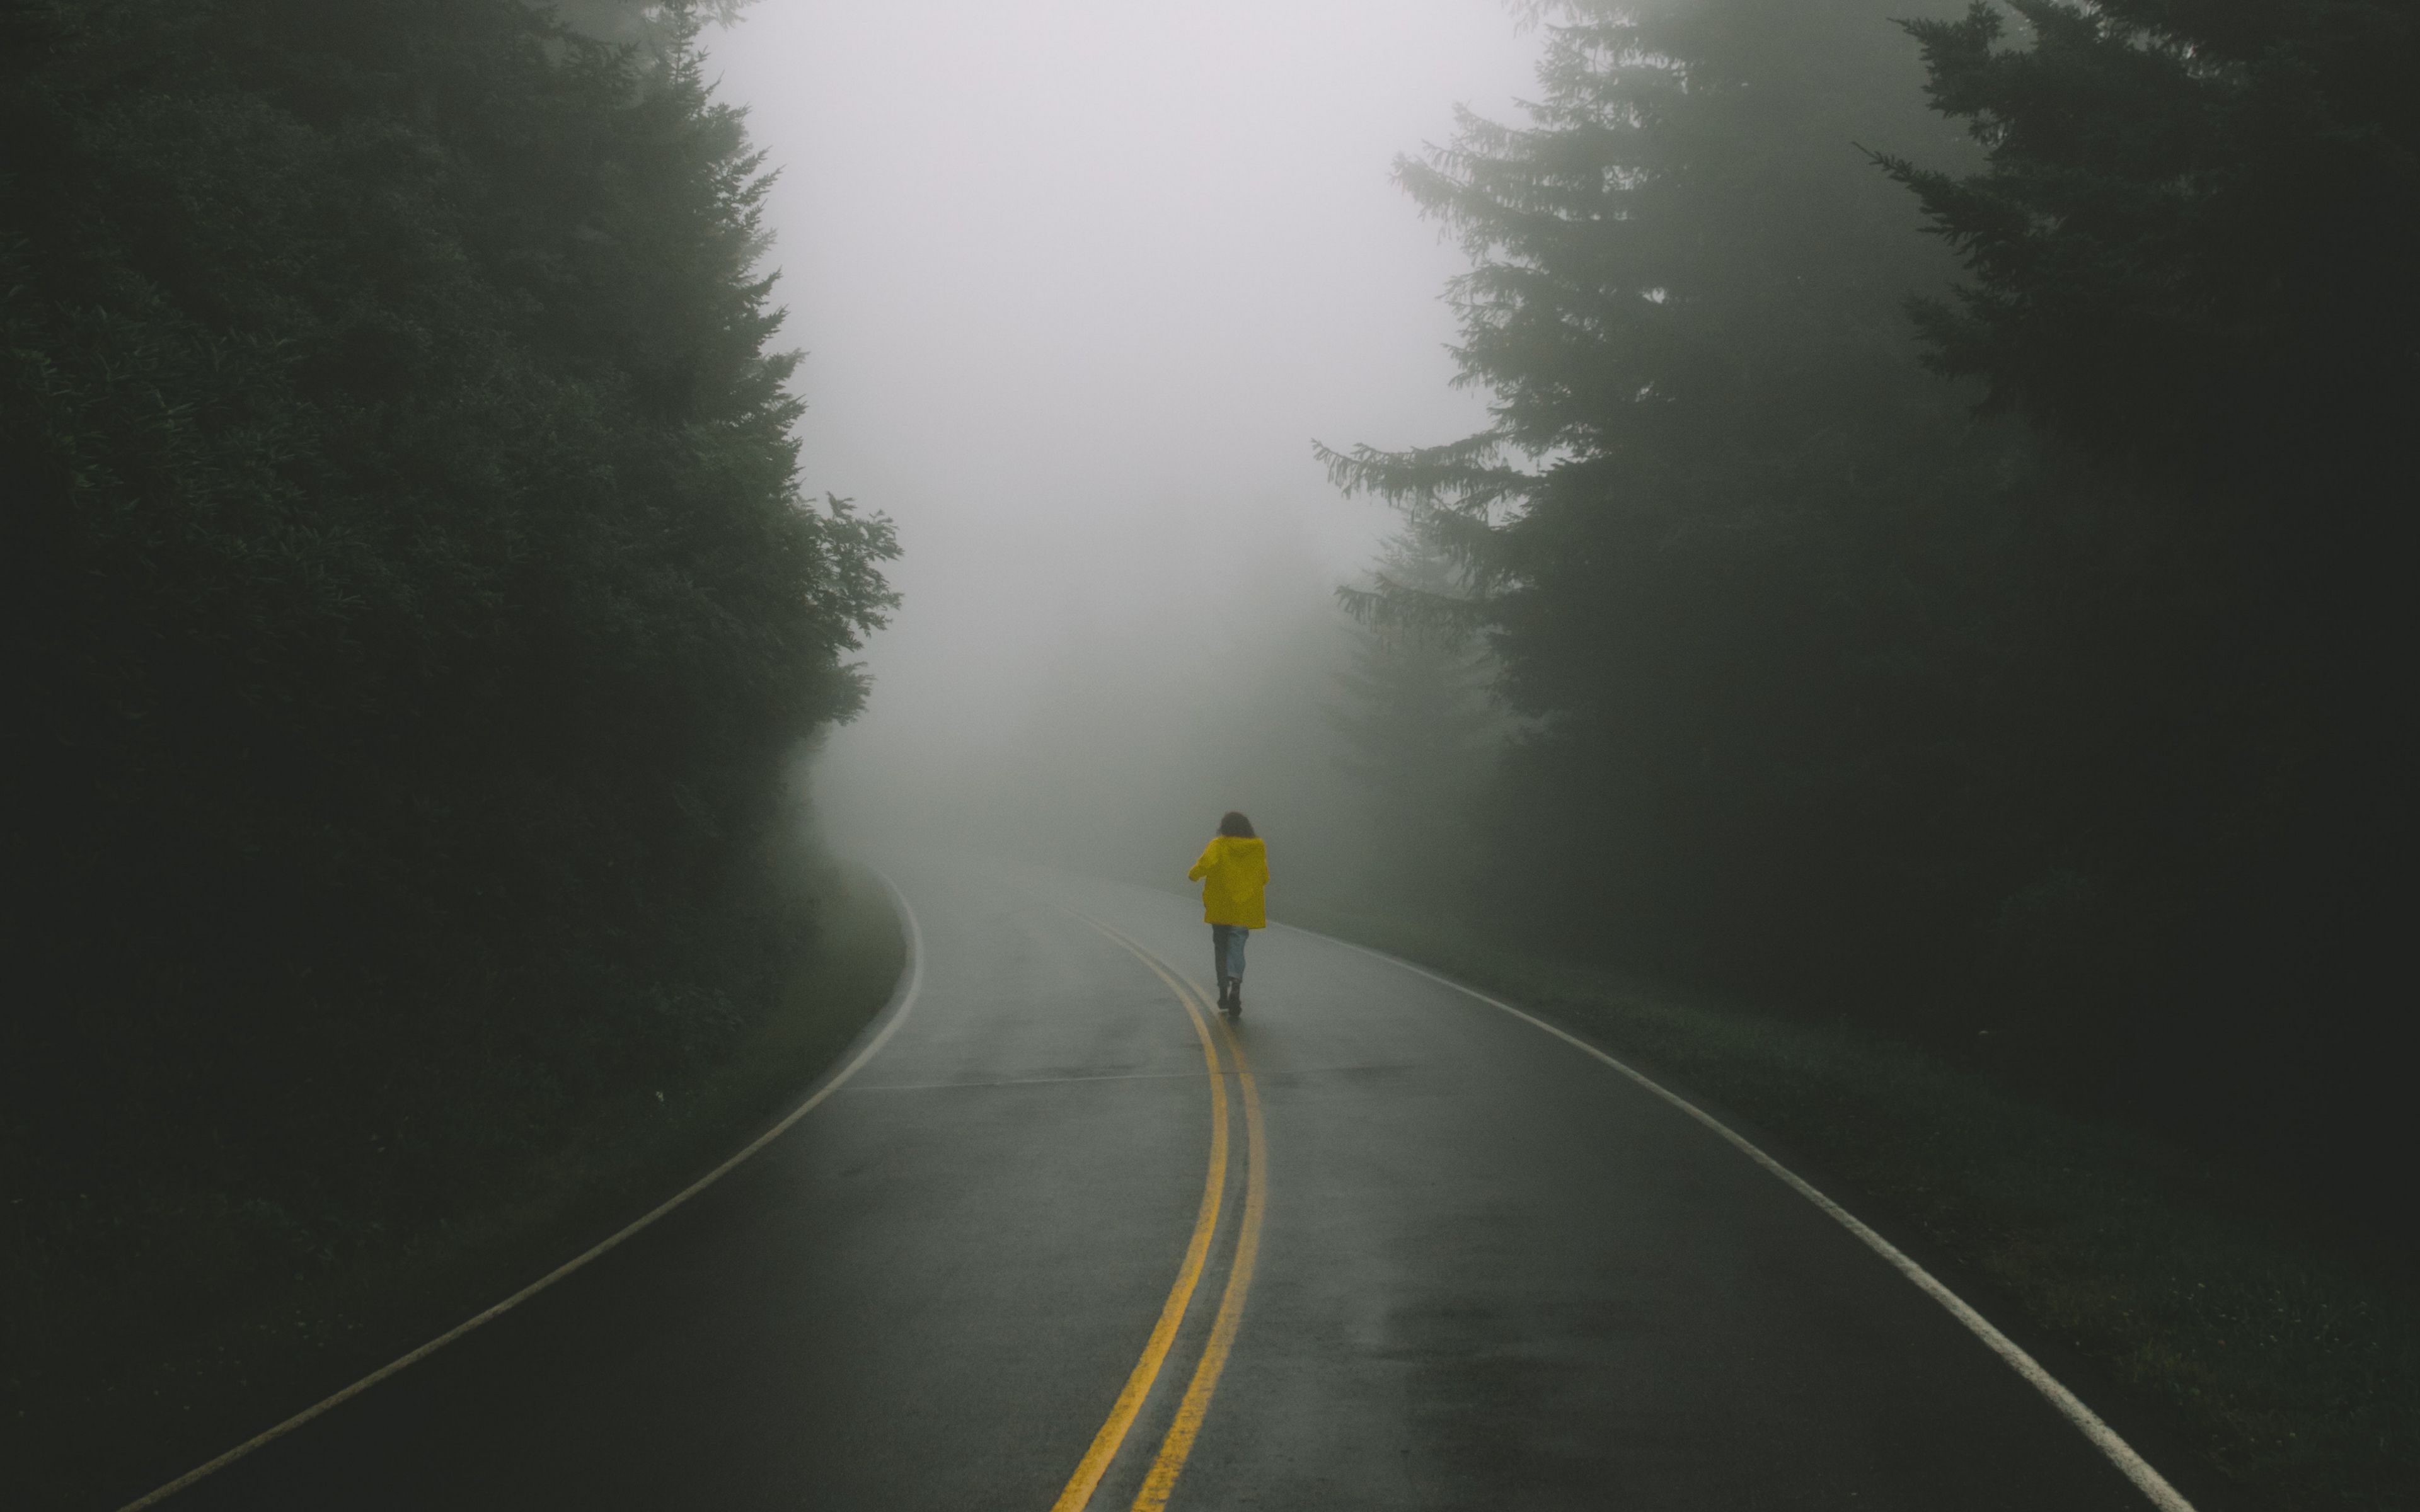 Светлеет воздух видней дорога яснеет. Человек на дороге. Идет по дороге. Человек идет по дороге. Человек на дороге в тумане.